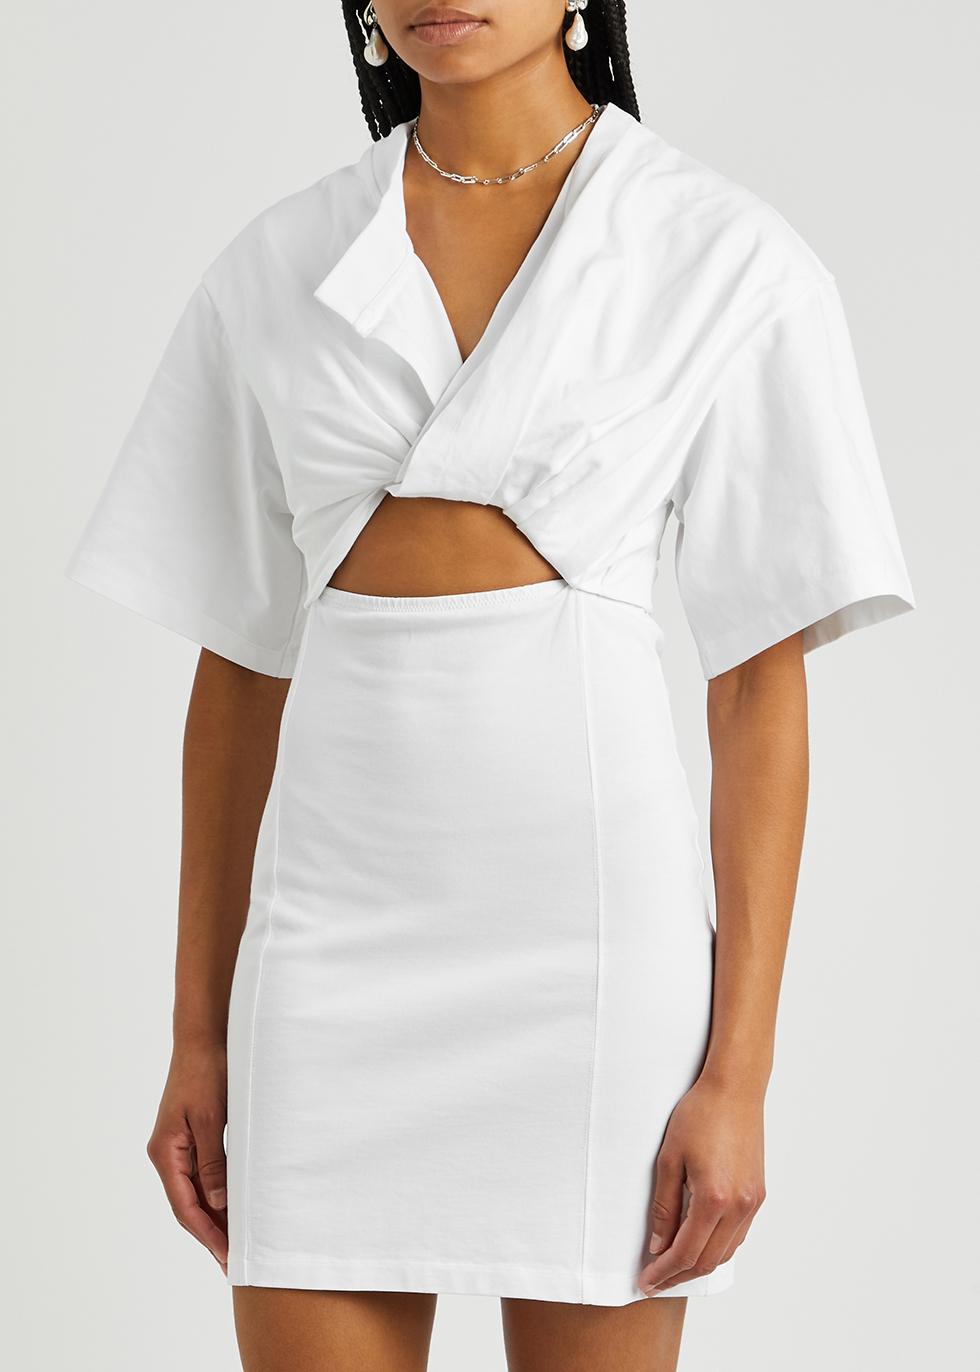 Jacquemus La Robe T-shirt Bahia Cotton Mini Dress in White | Lyst